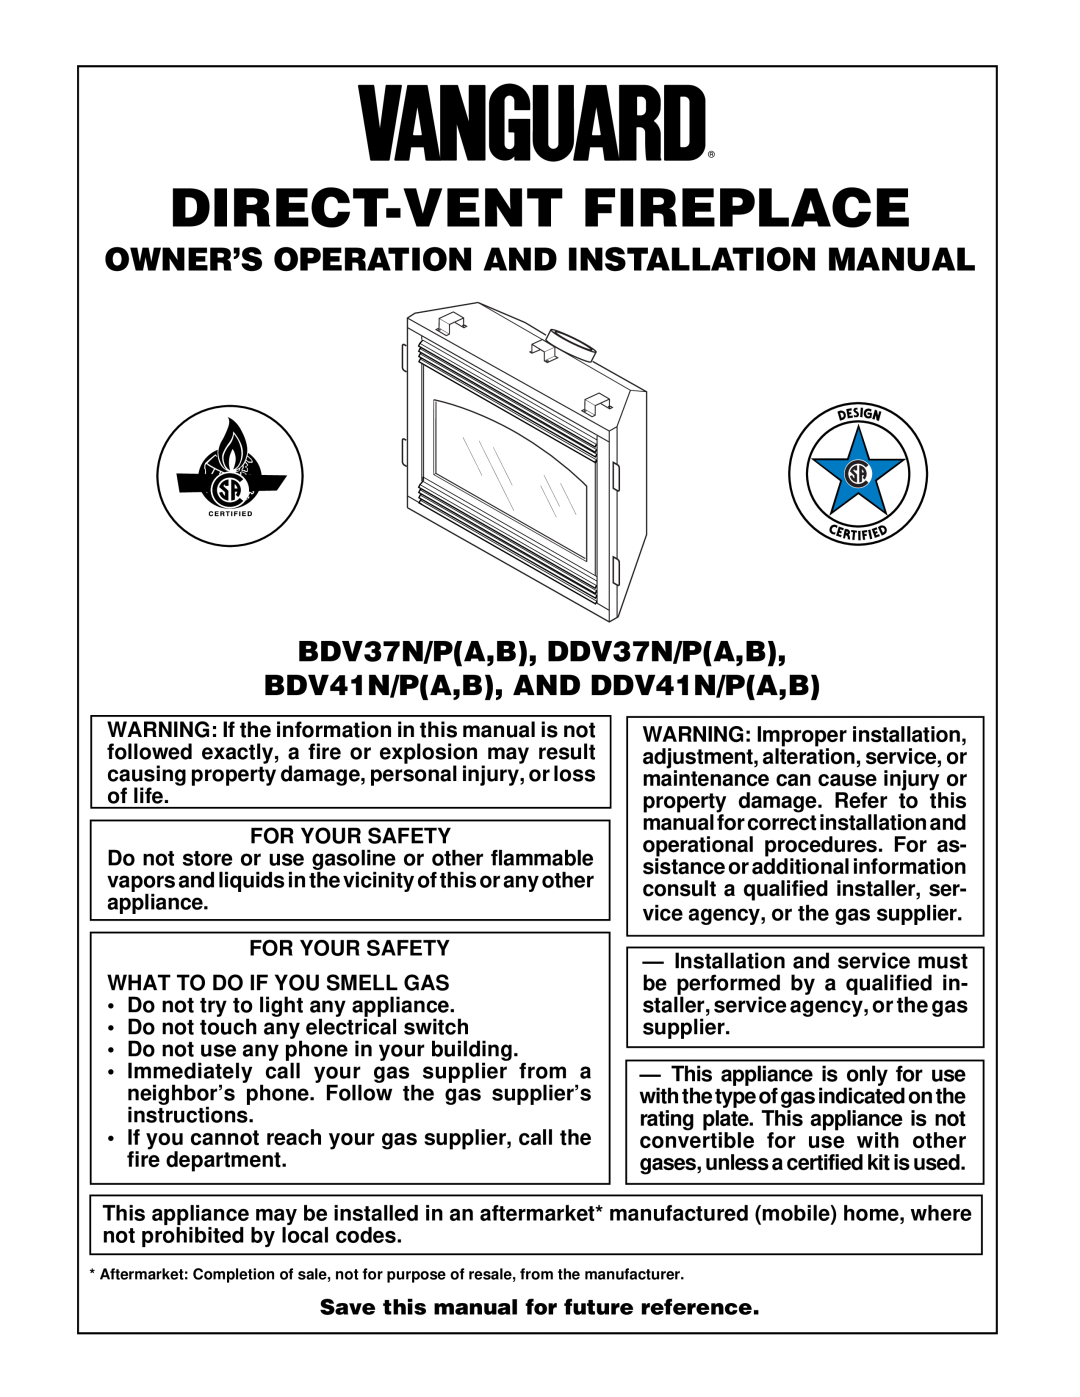 Desa B) installation manual Owner’S Operation And Installation Manual, BDV37N/PA,B, DDV37N/PA,B, Direct-Ventfireplace 